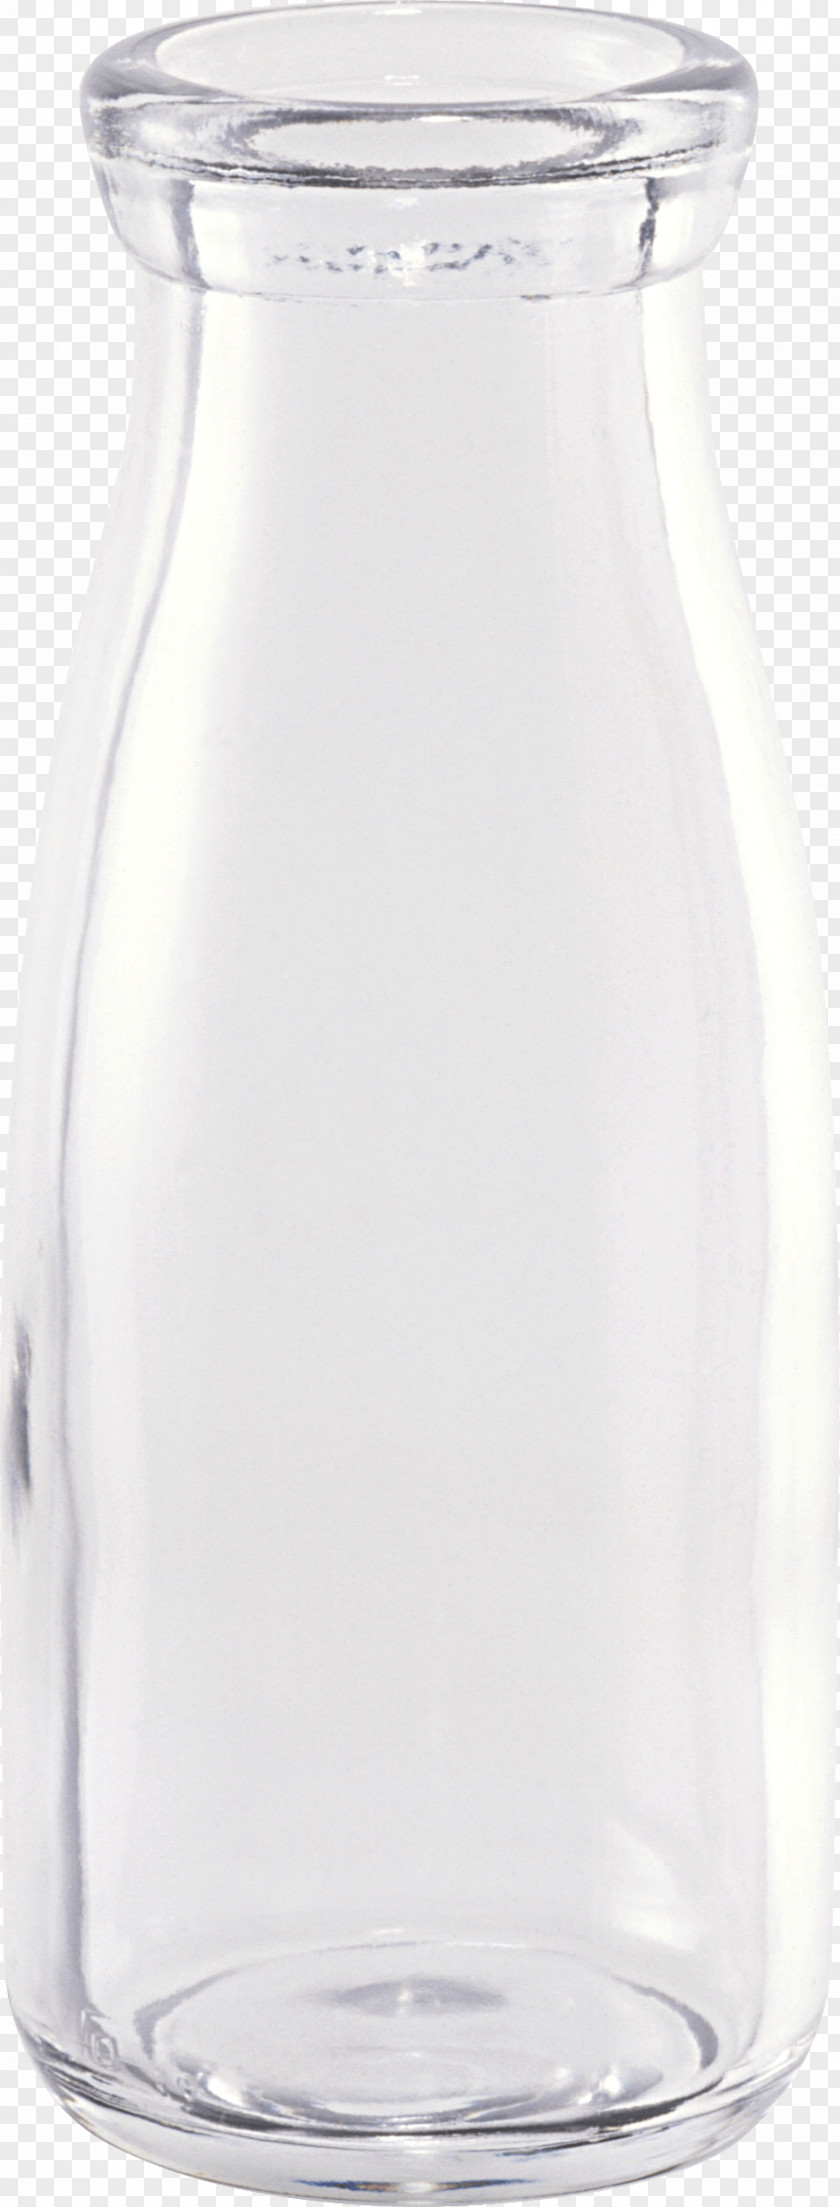 Milk Bottle Glass Jar PNG